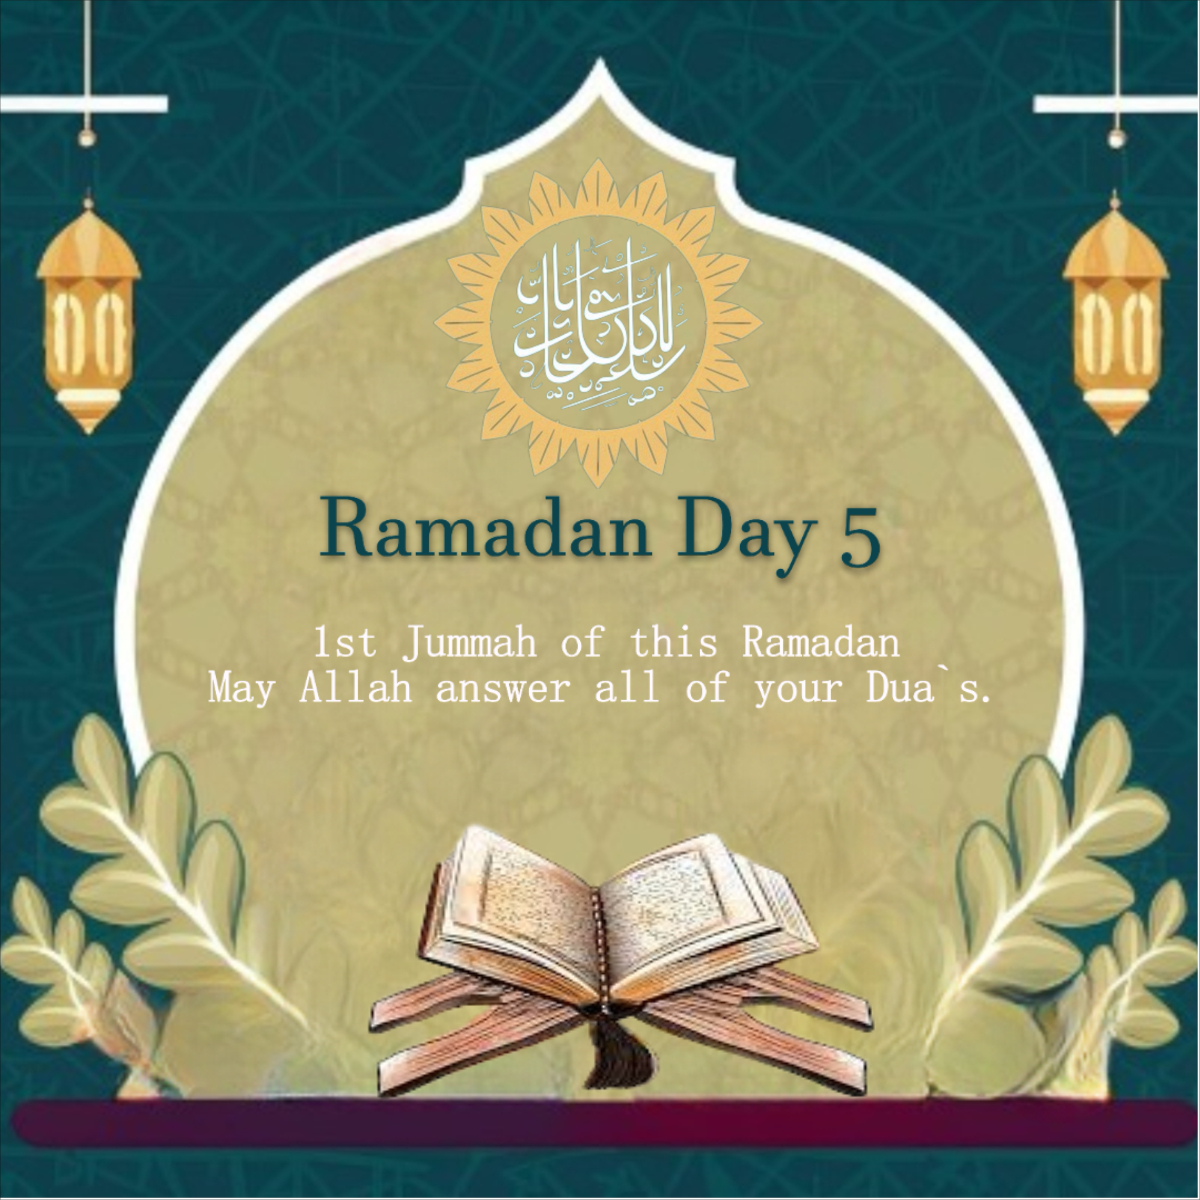 ramadan mubarak day 5 thought download image HD for free